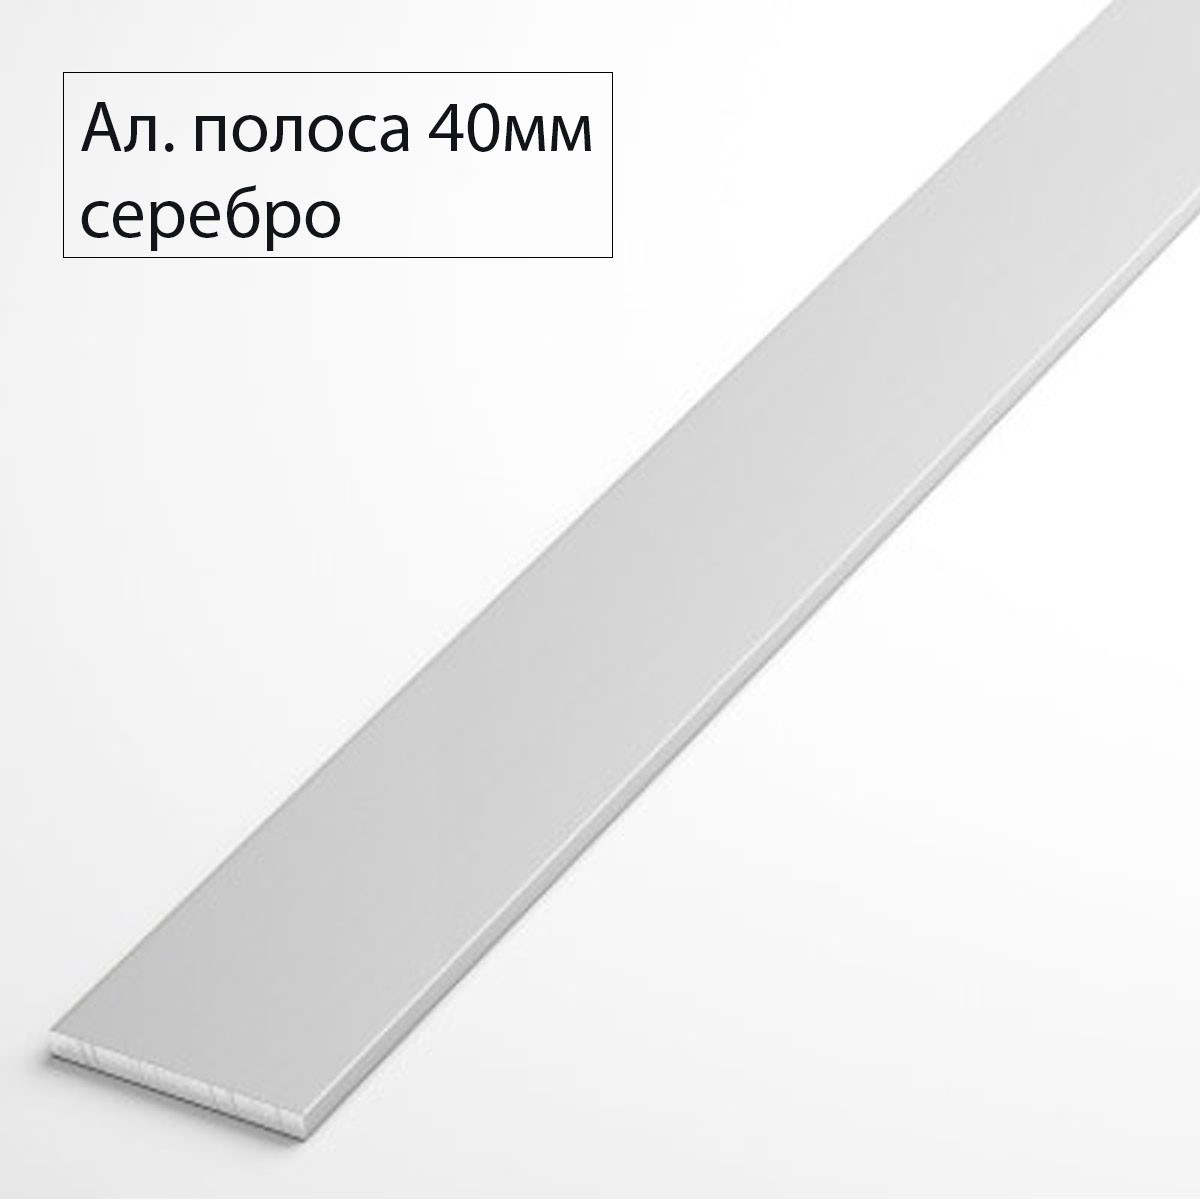 Алюминиевая полоса 40мм 3,0м серебро